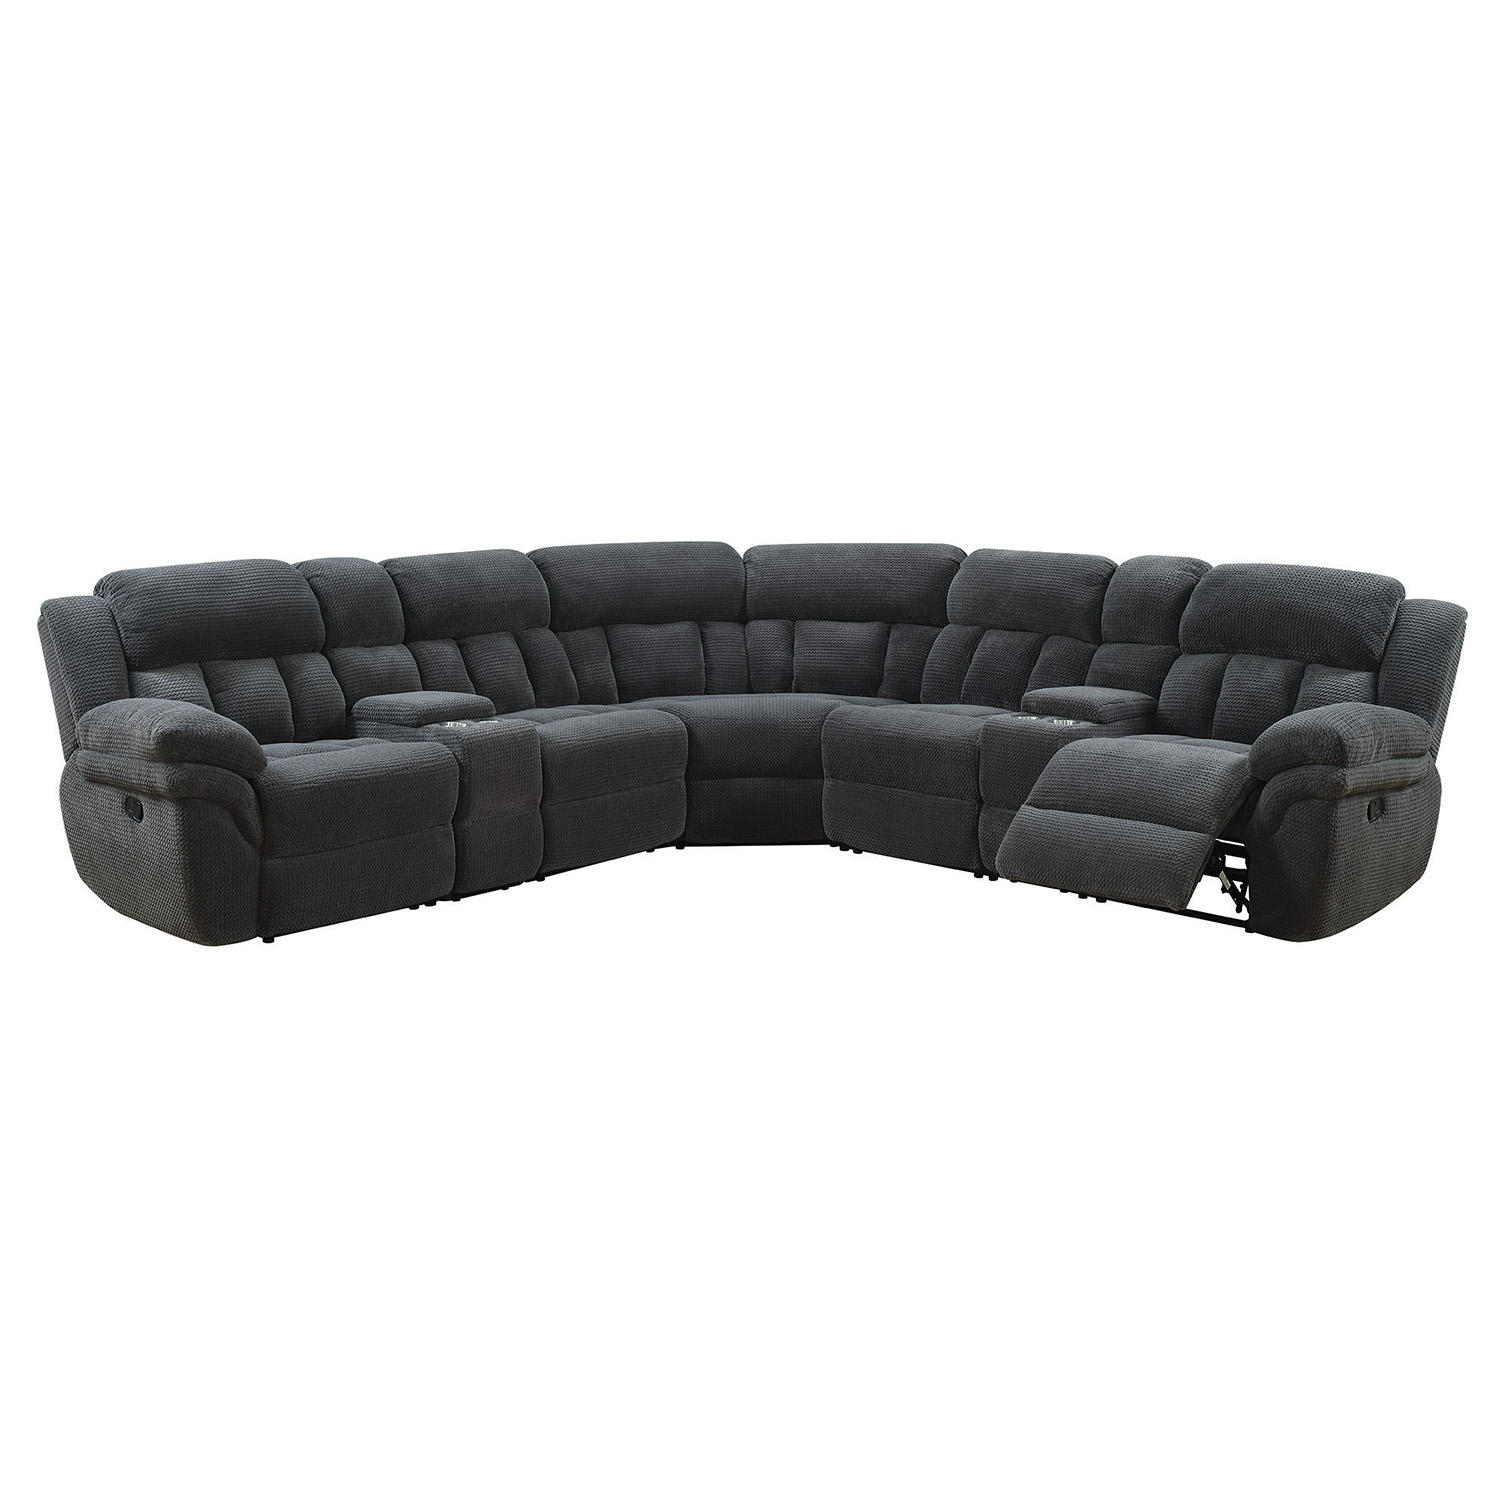 Celeste 7-Piece Sectional Sofa Set